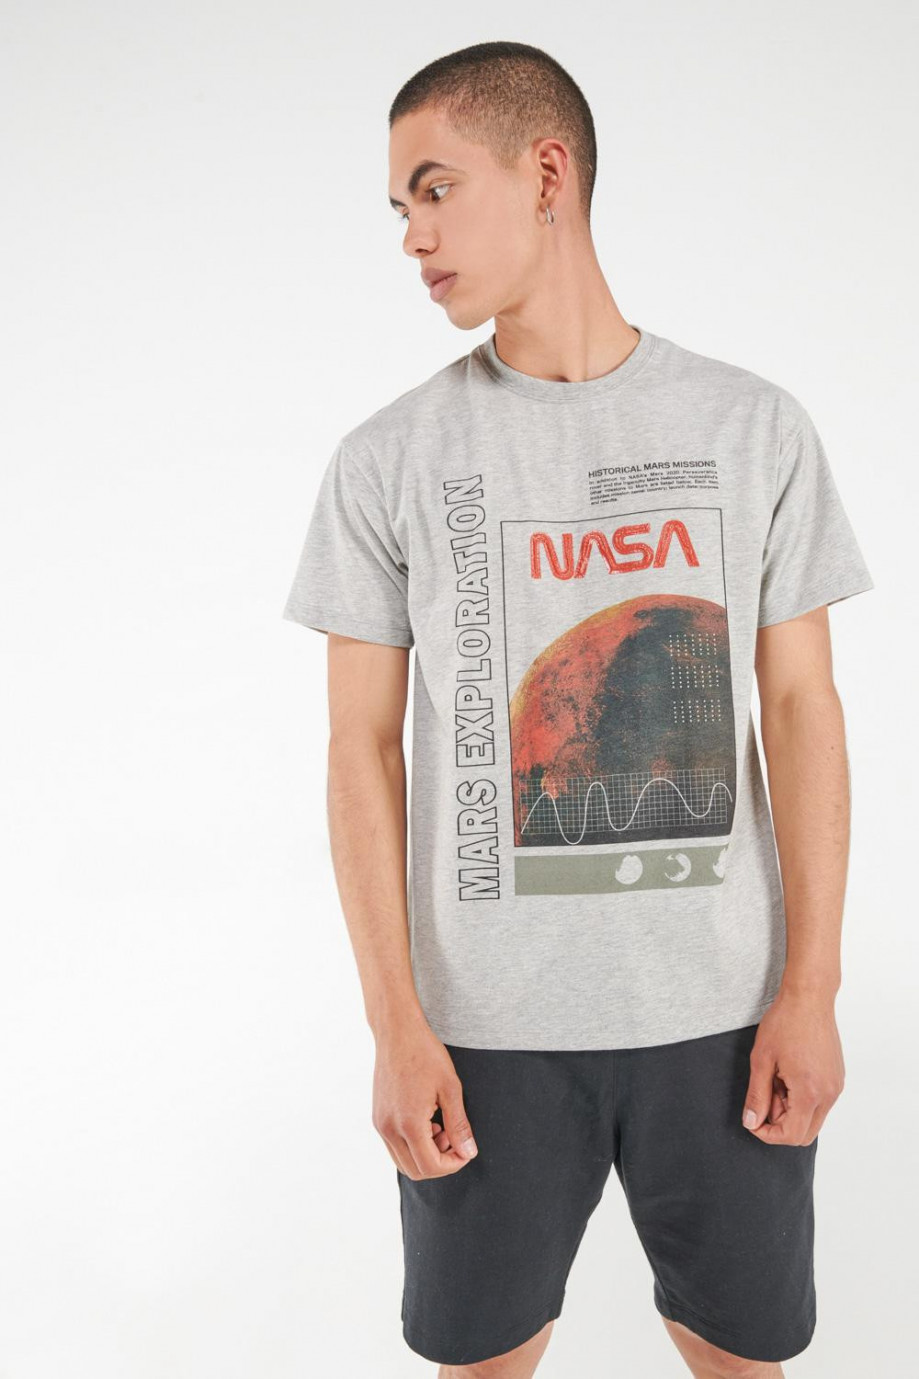 Camiseta manga corta, estampado NASA